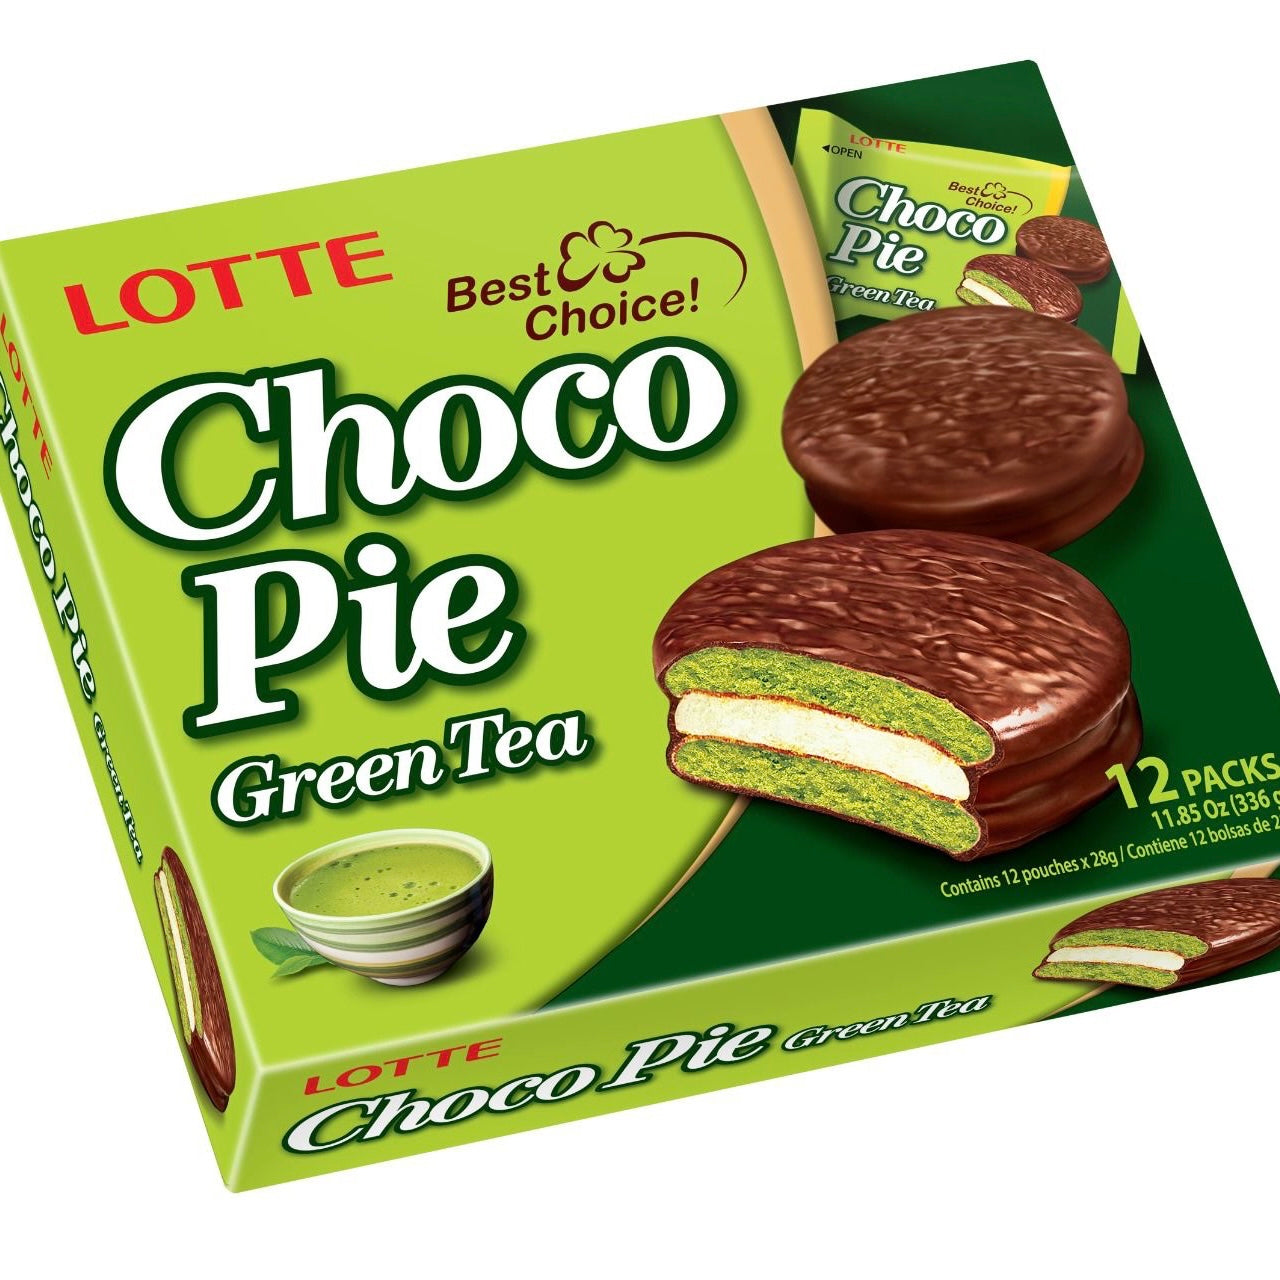 Lotte Chocopie Green Tea 12 packs 336g